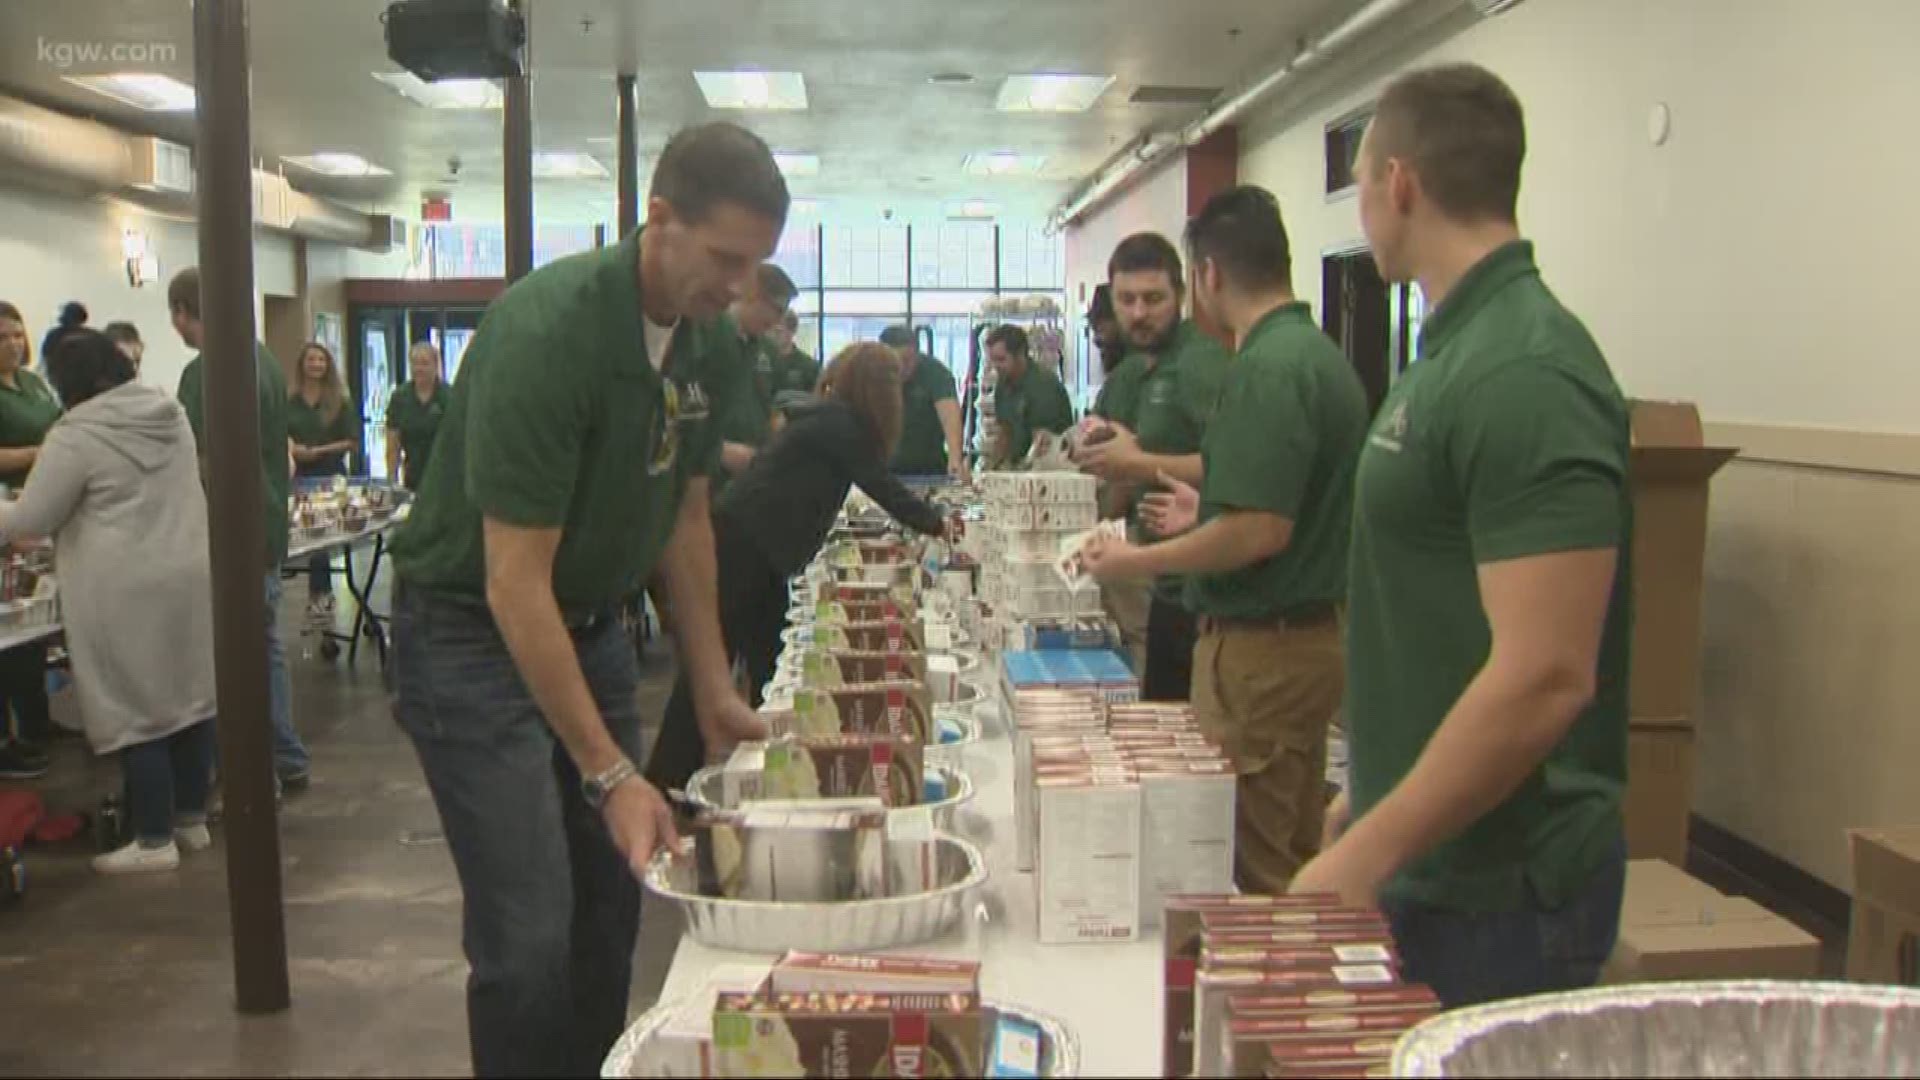 Volunteers put together, distribute meals